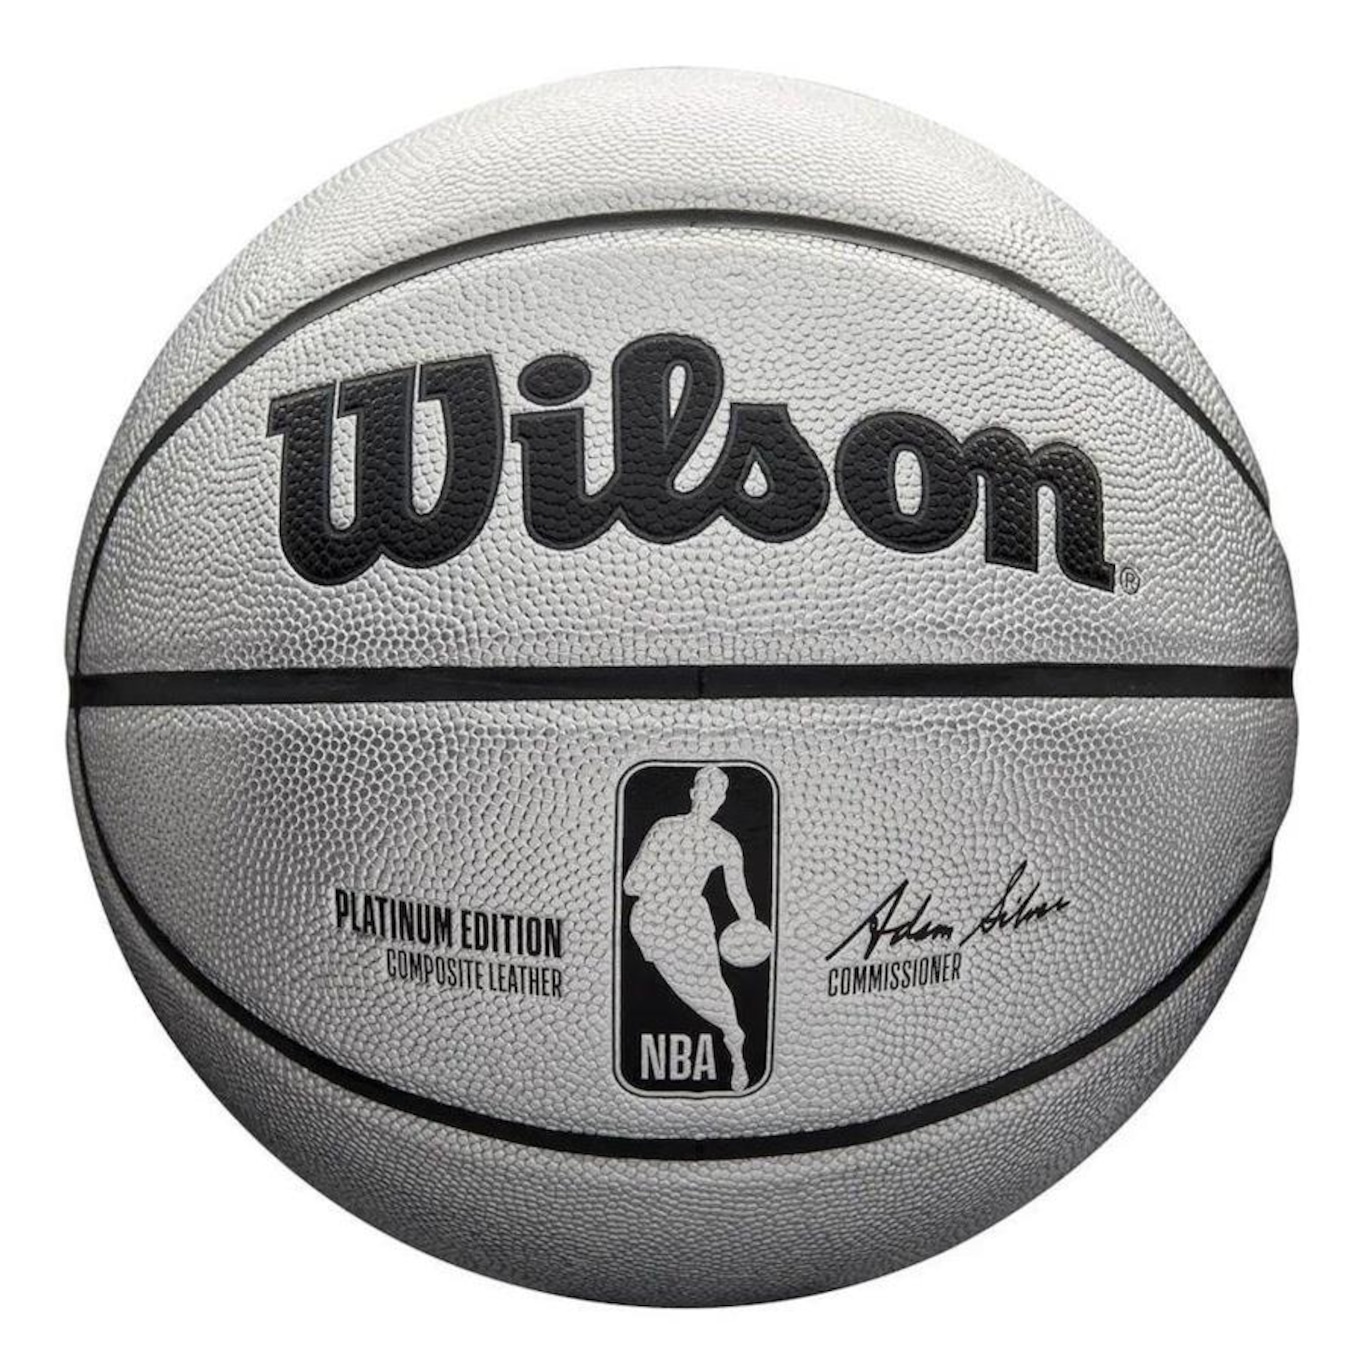 Bola de basquete Wilson NBA para jogos internos/externos tamanho 7 nova bola  de basquete 97512554305